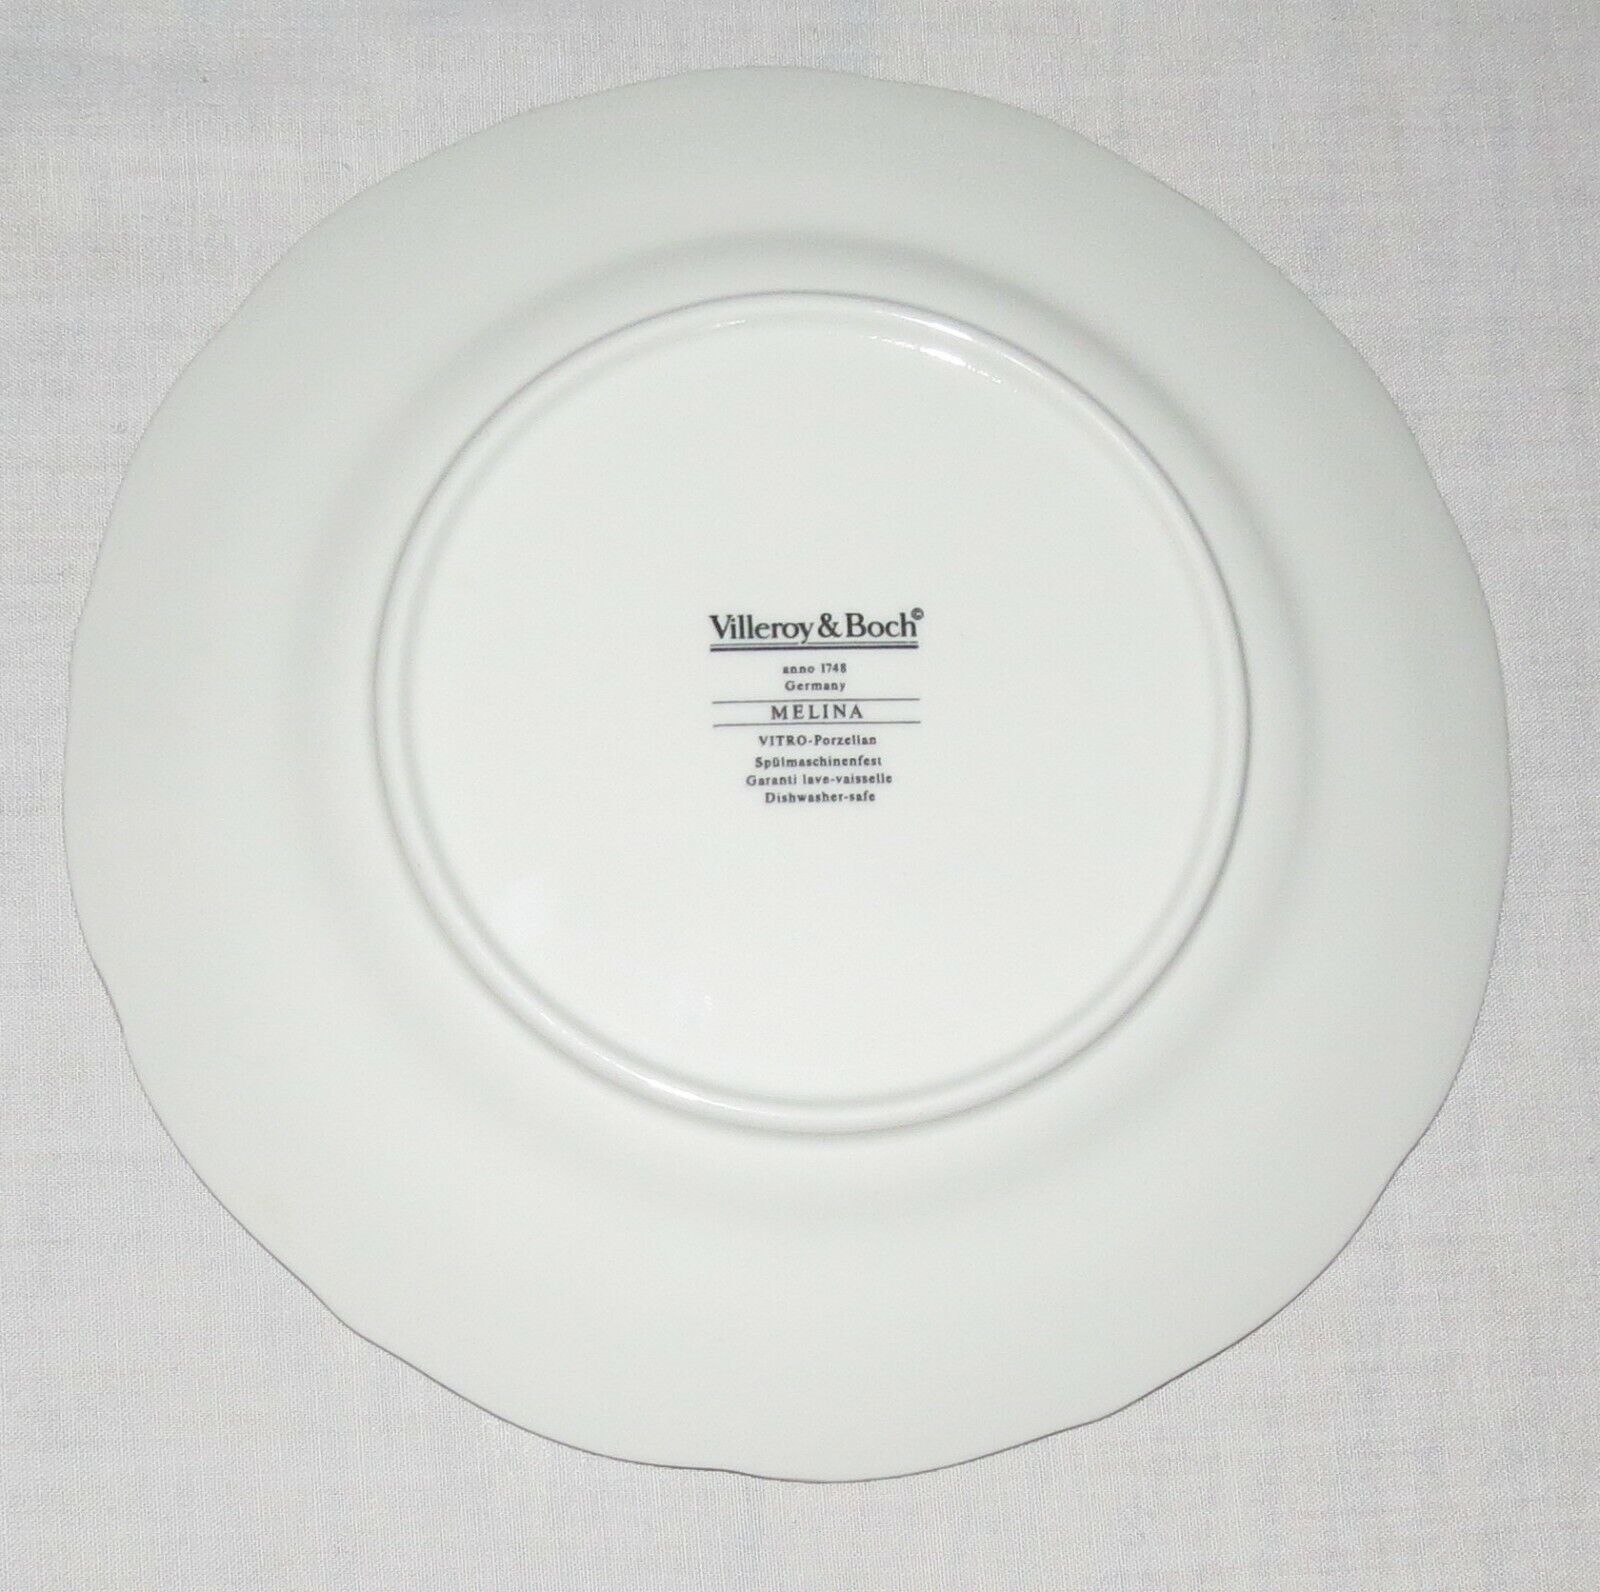 Villeroy & Boch Melina 8.25 inch Salad Plate - Excellent